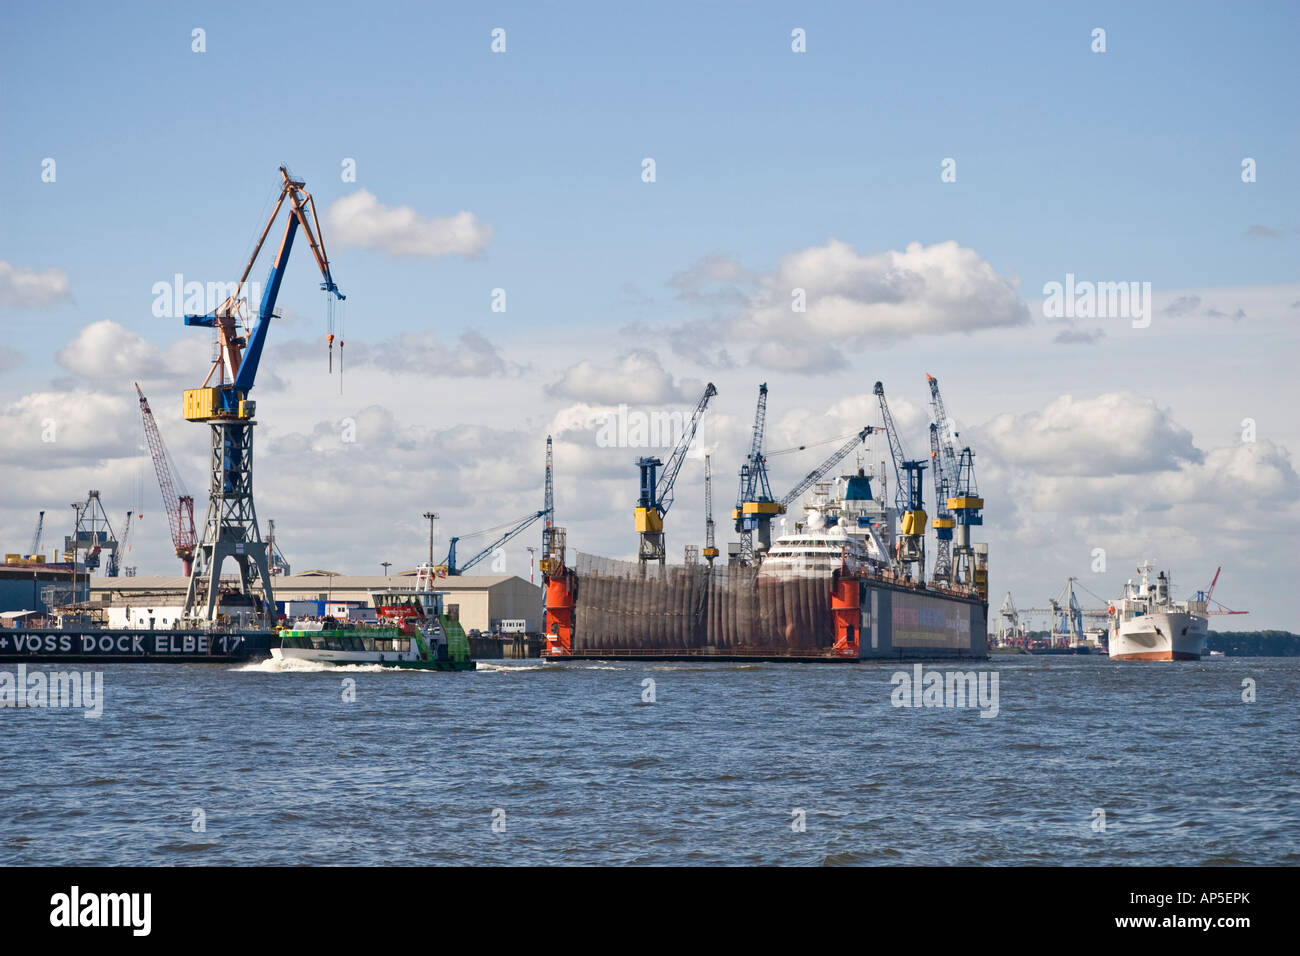 Blohm + Voss drydock in Hamburg Germany Stock Photo